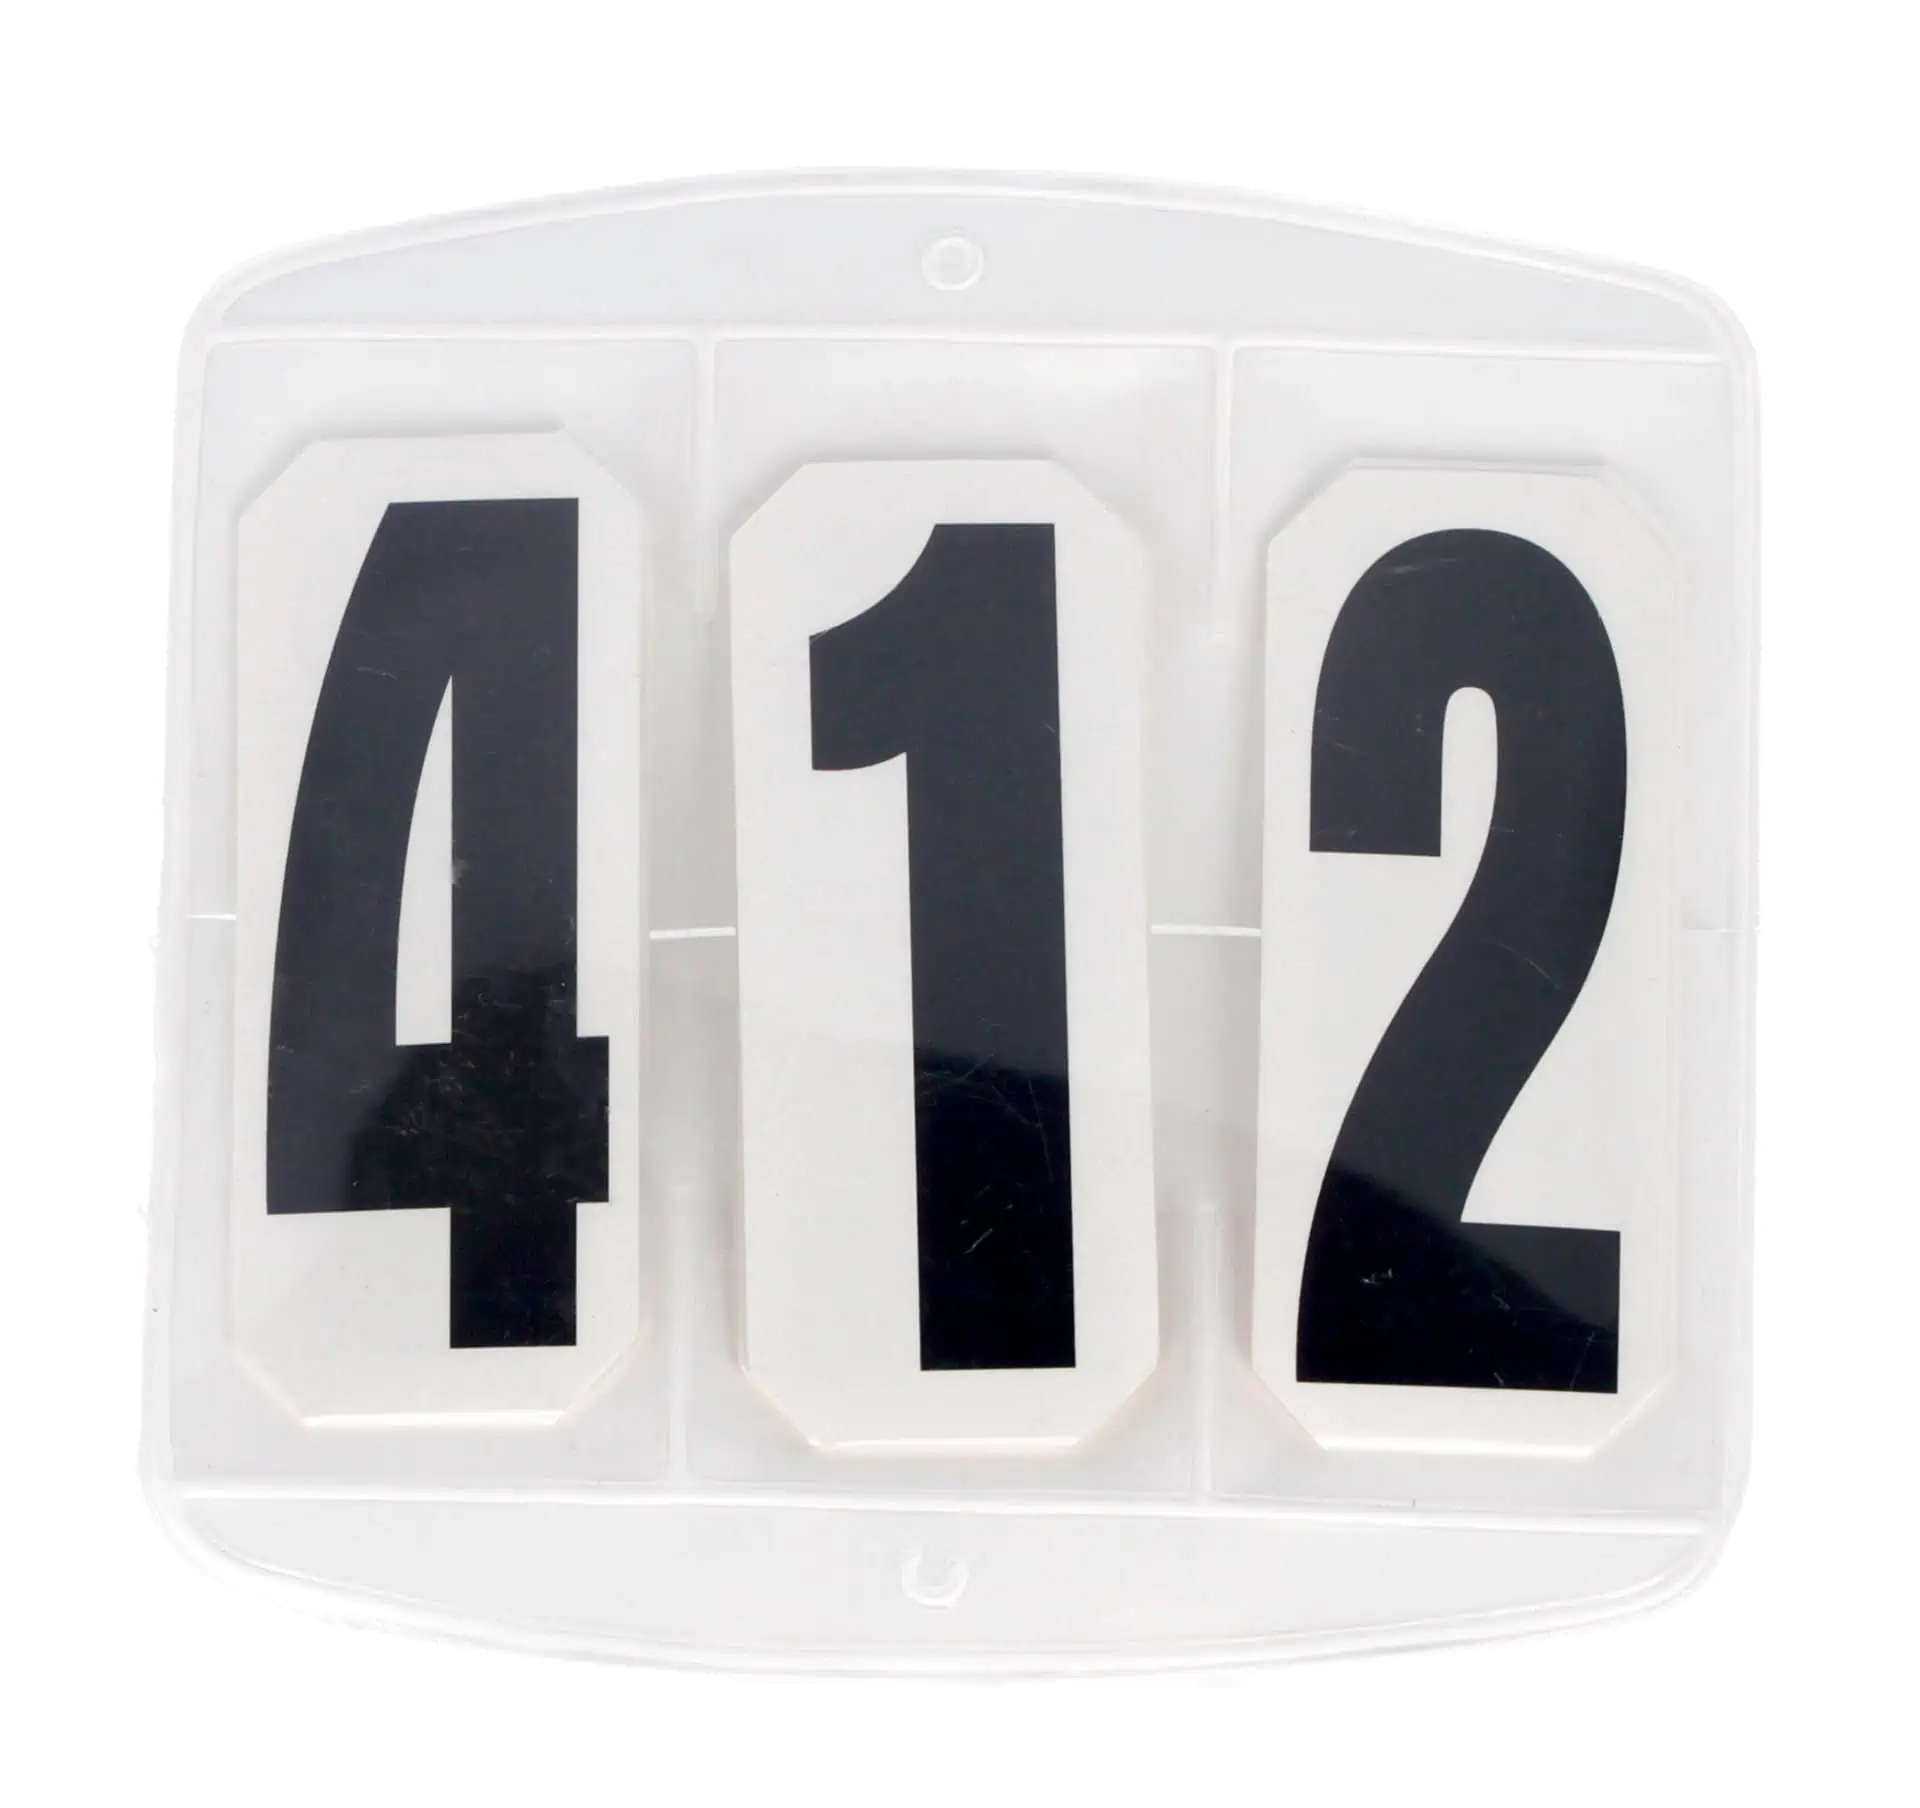 Tournament numbers, 3-digit, velcro fastener, in pairs